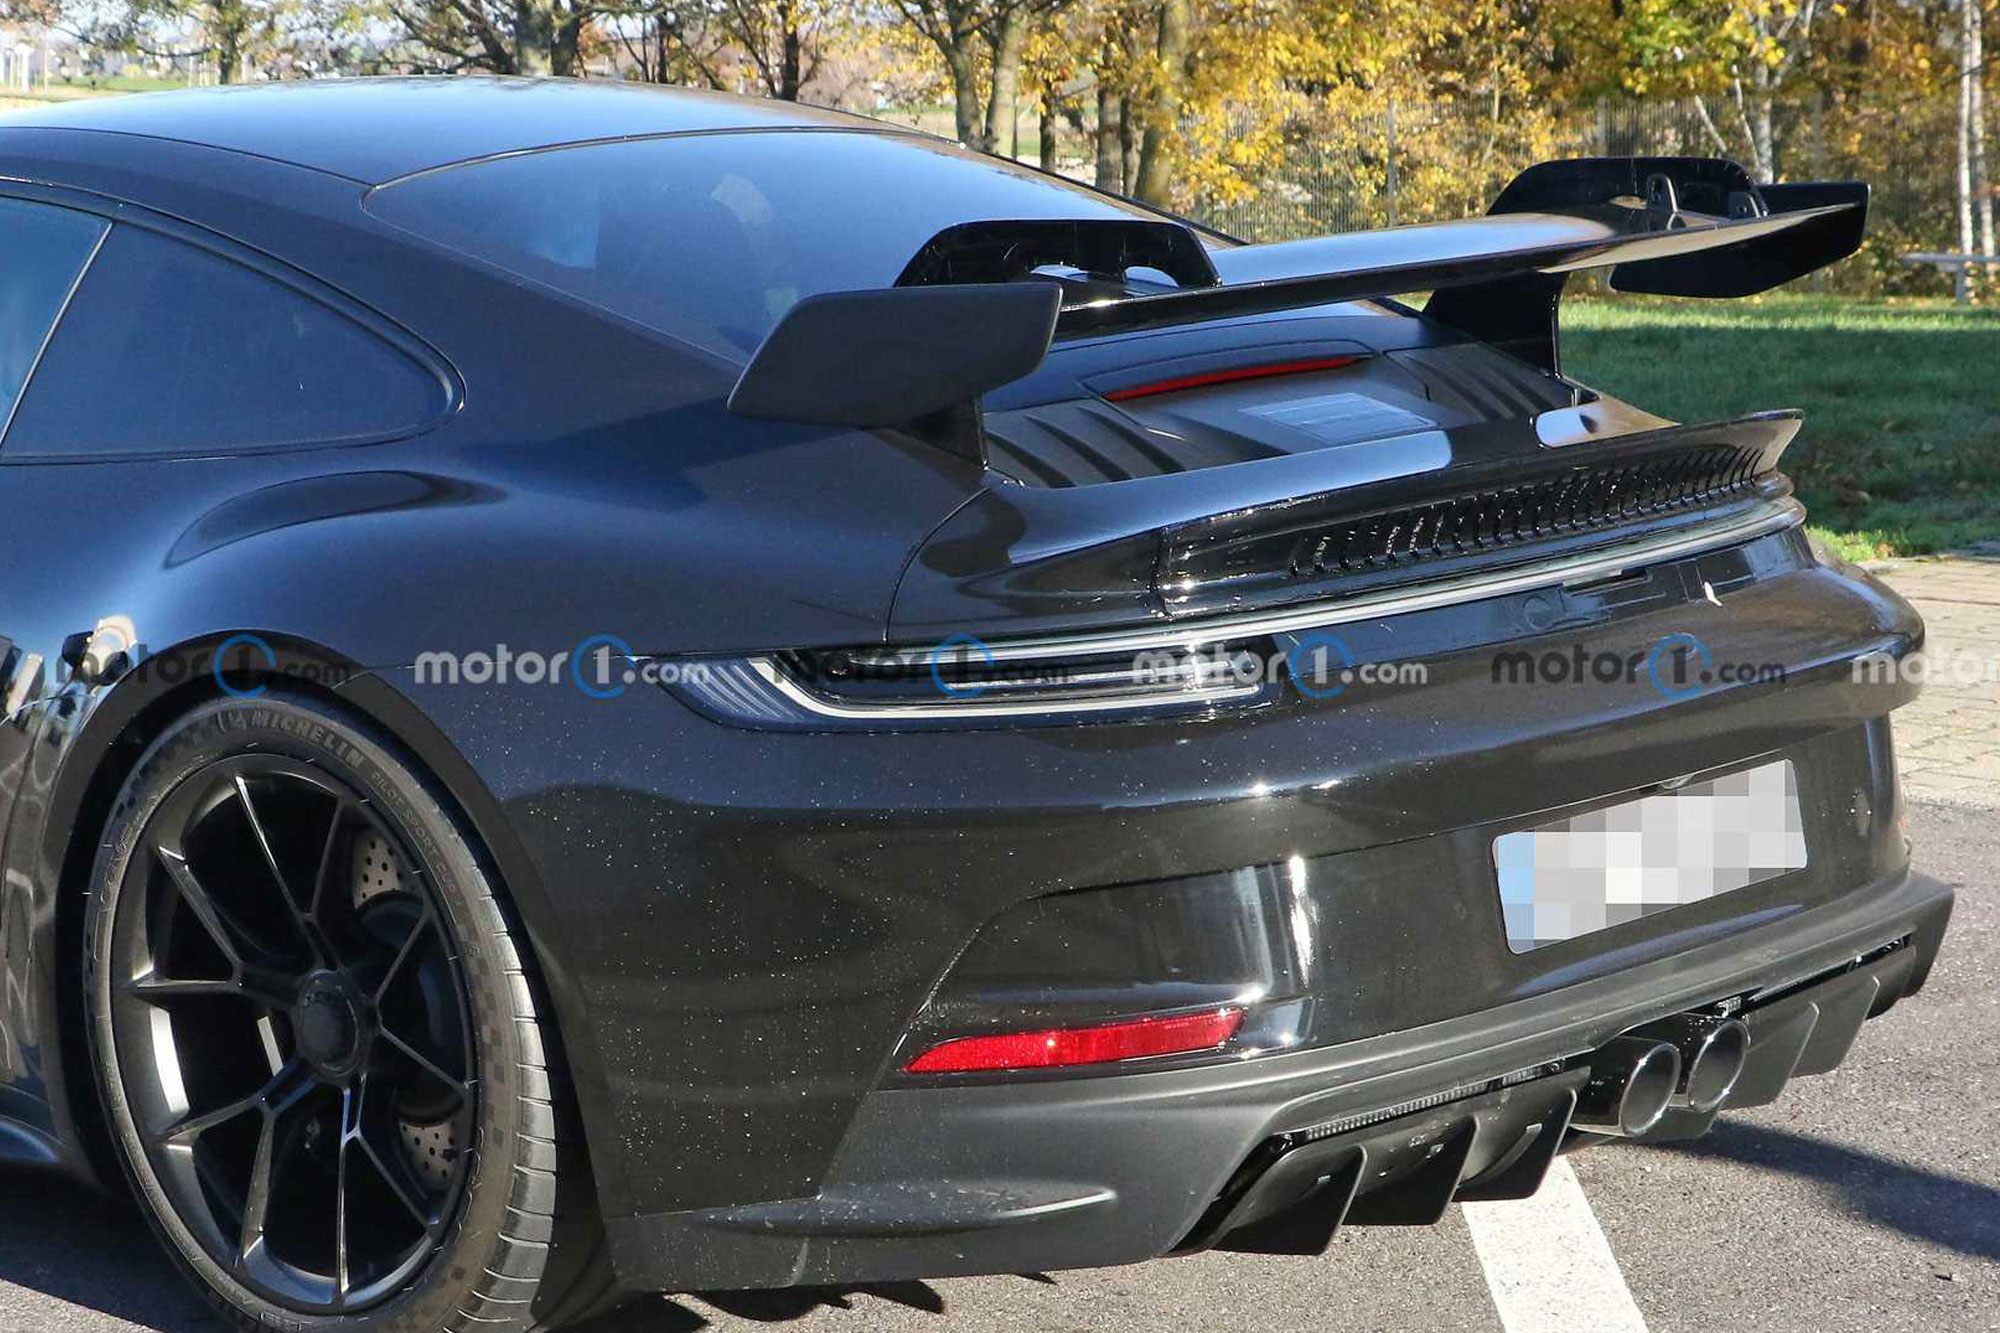 Spotted: Porsche 911 GT3